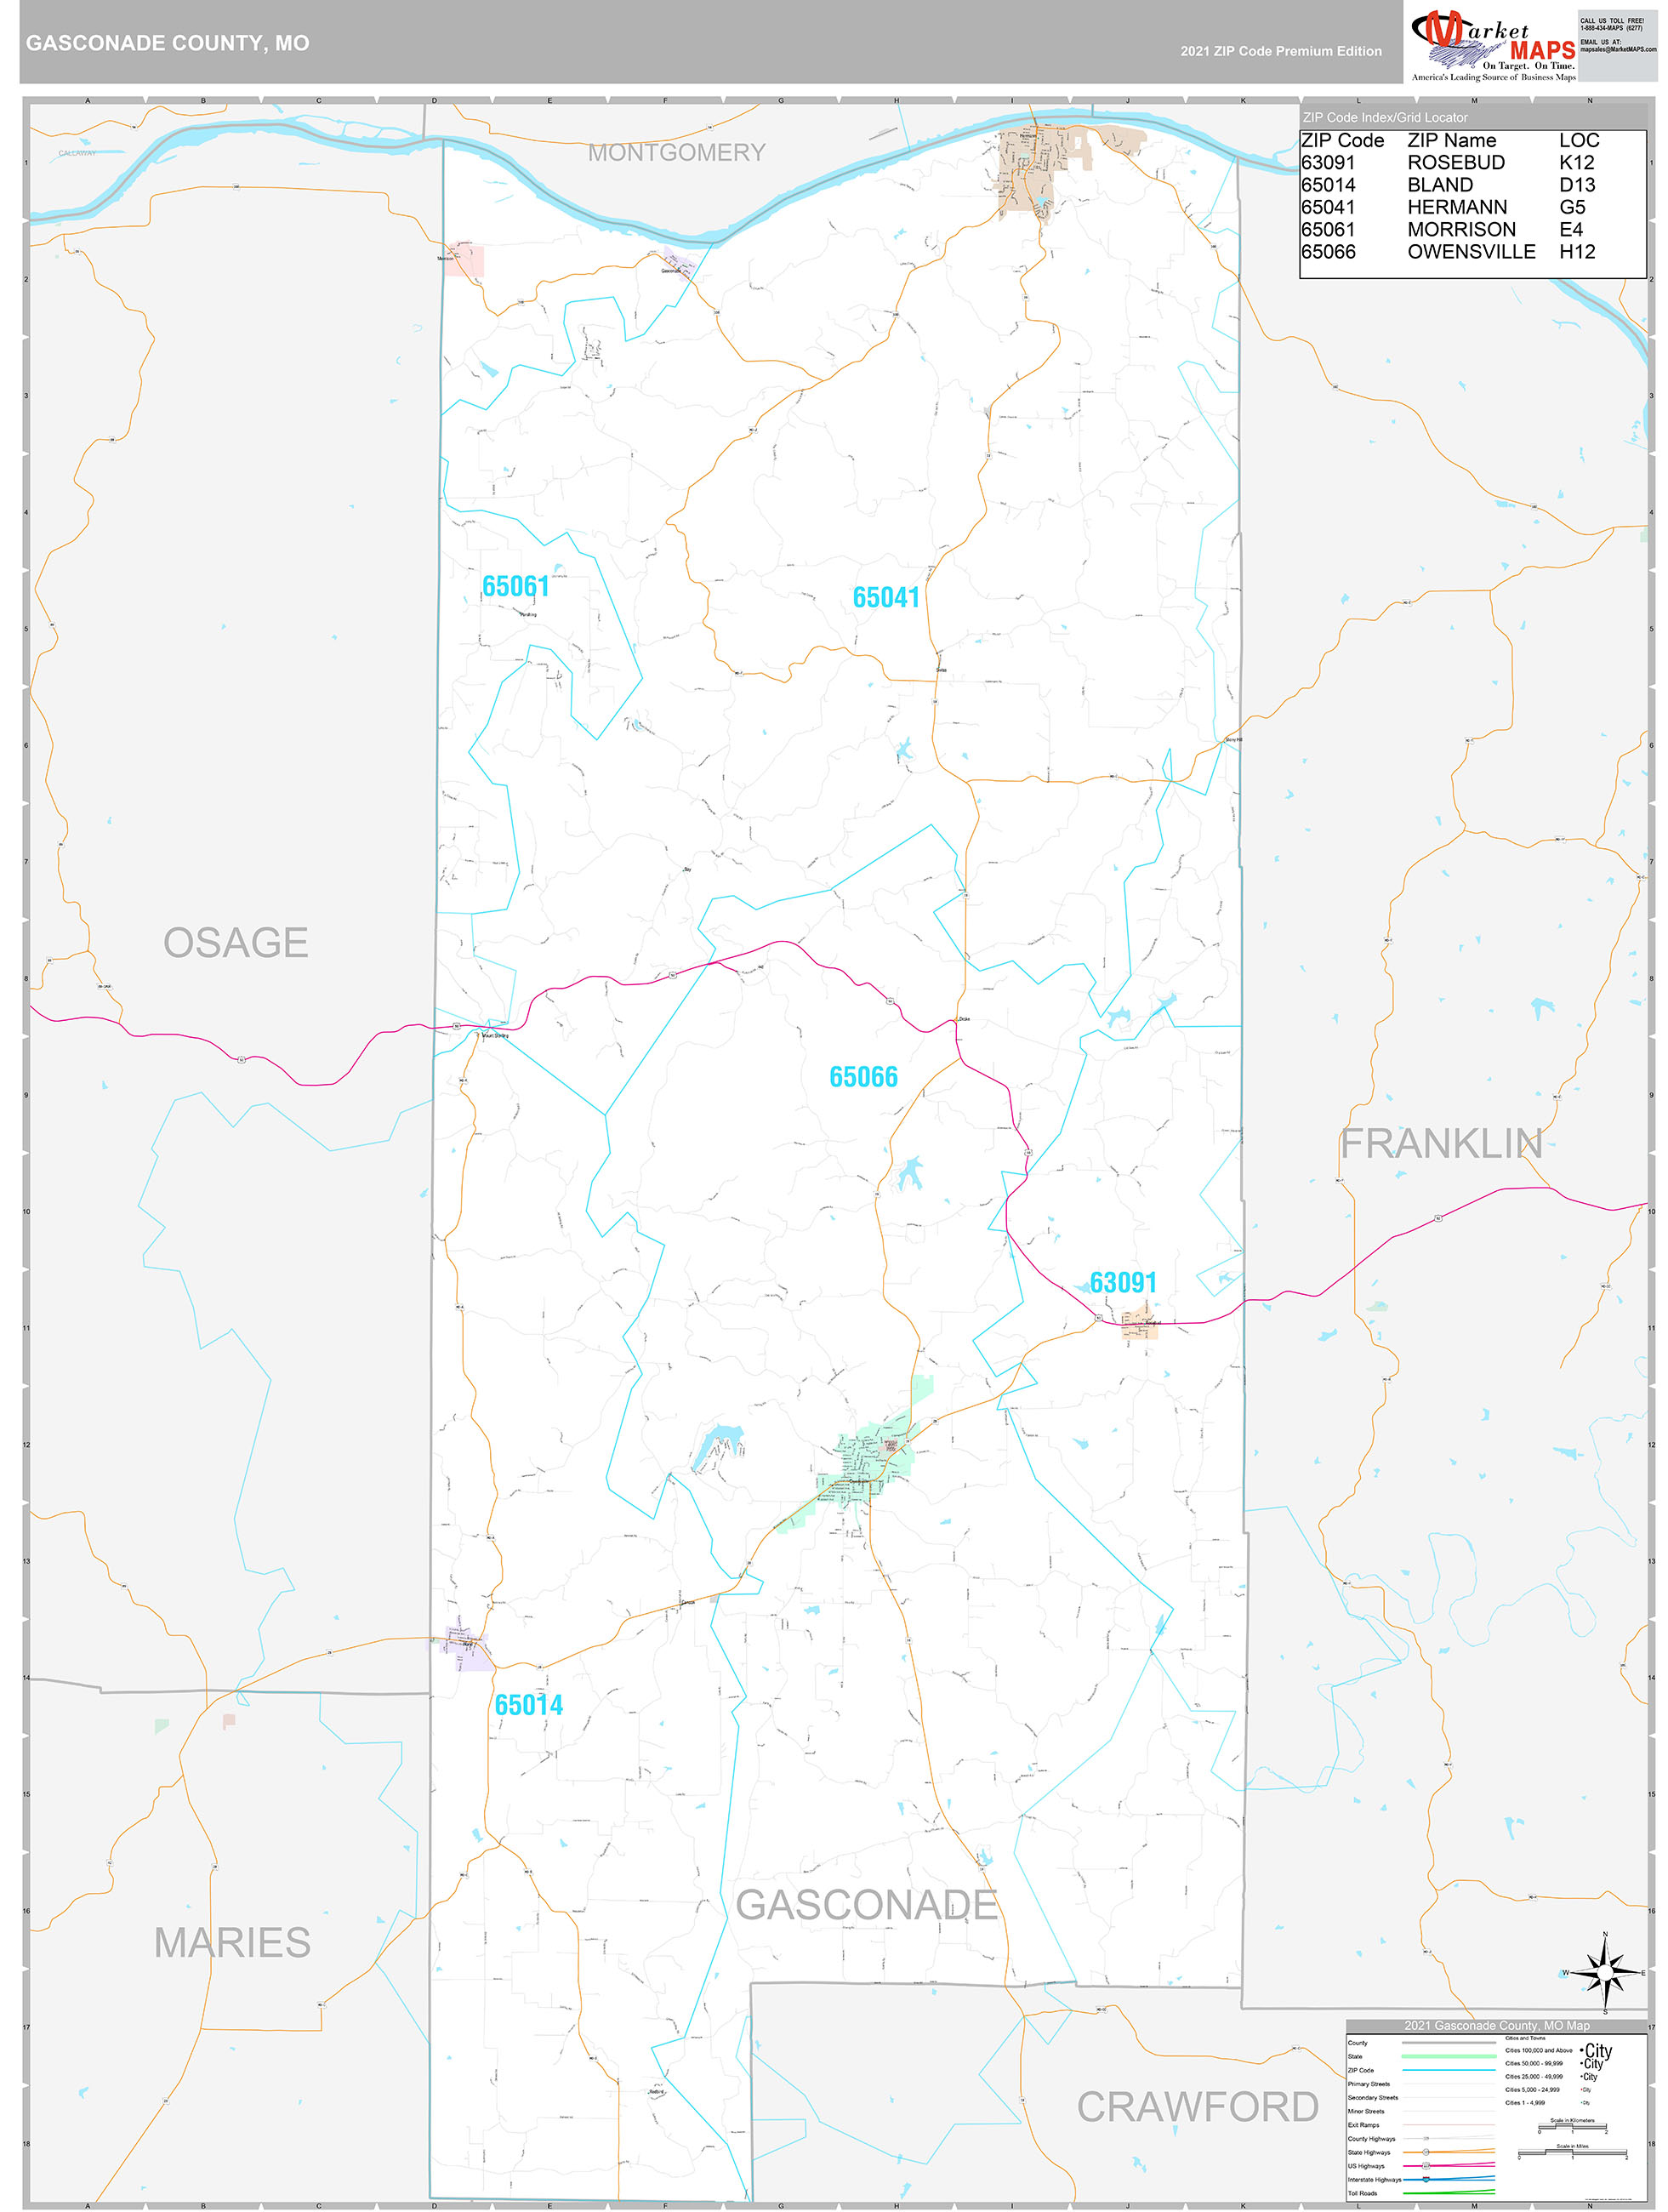 Gasconade County Mo Wall Map Premium Style By Marketmaps 5128